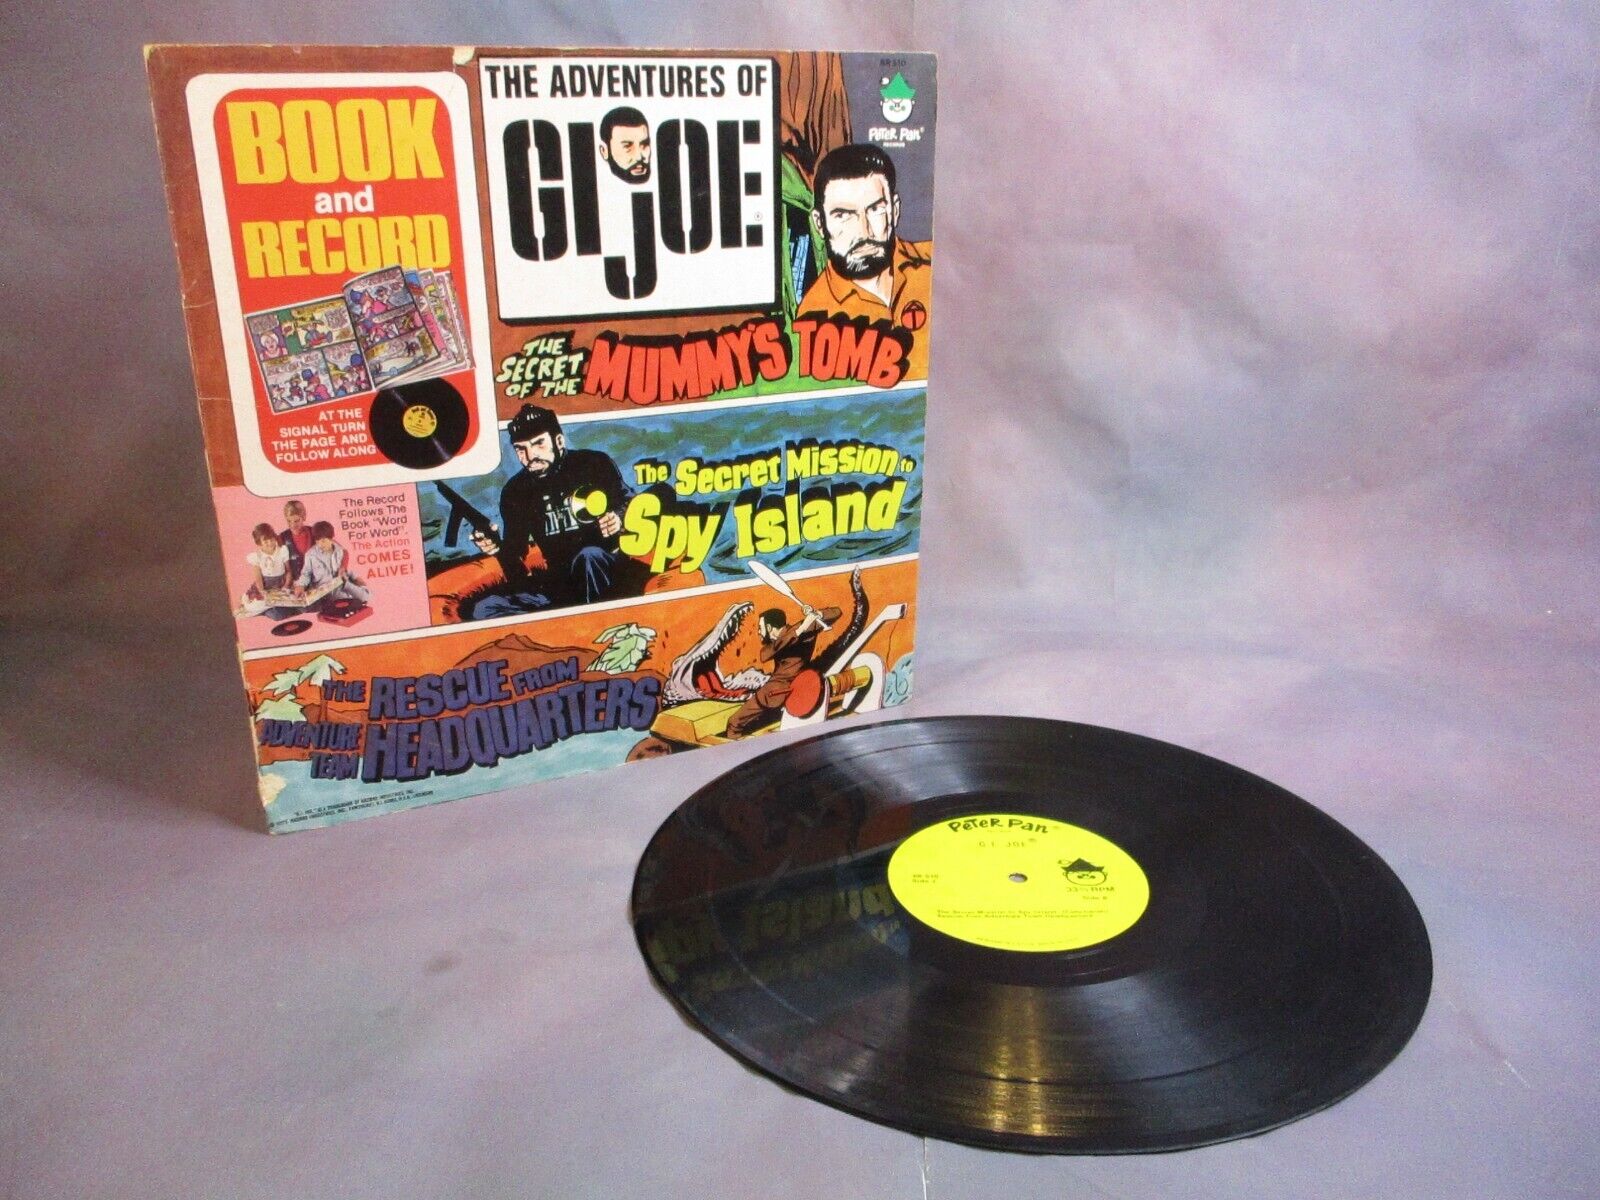 Vintage 1976 GI Joe Vinyl Record Album and Color Comic Book Set